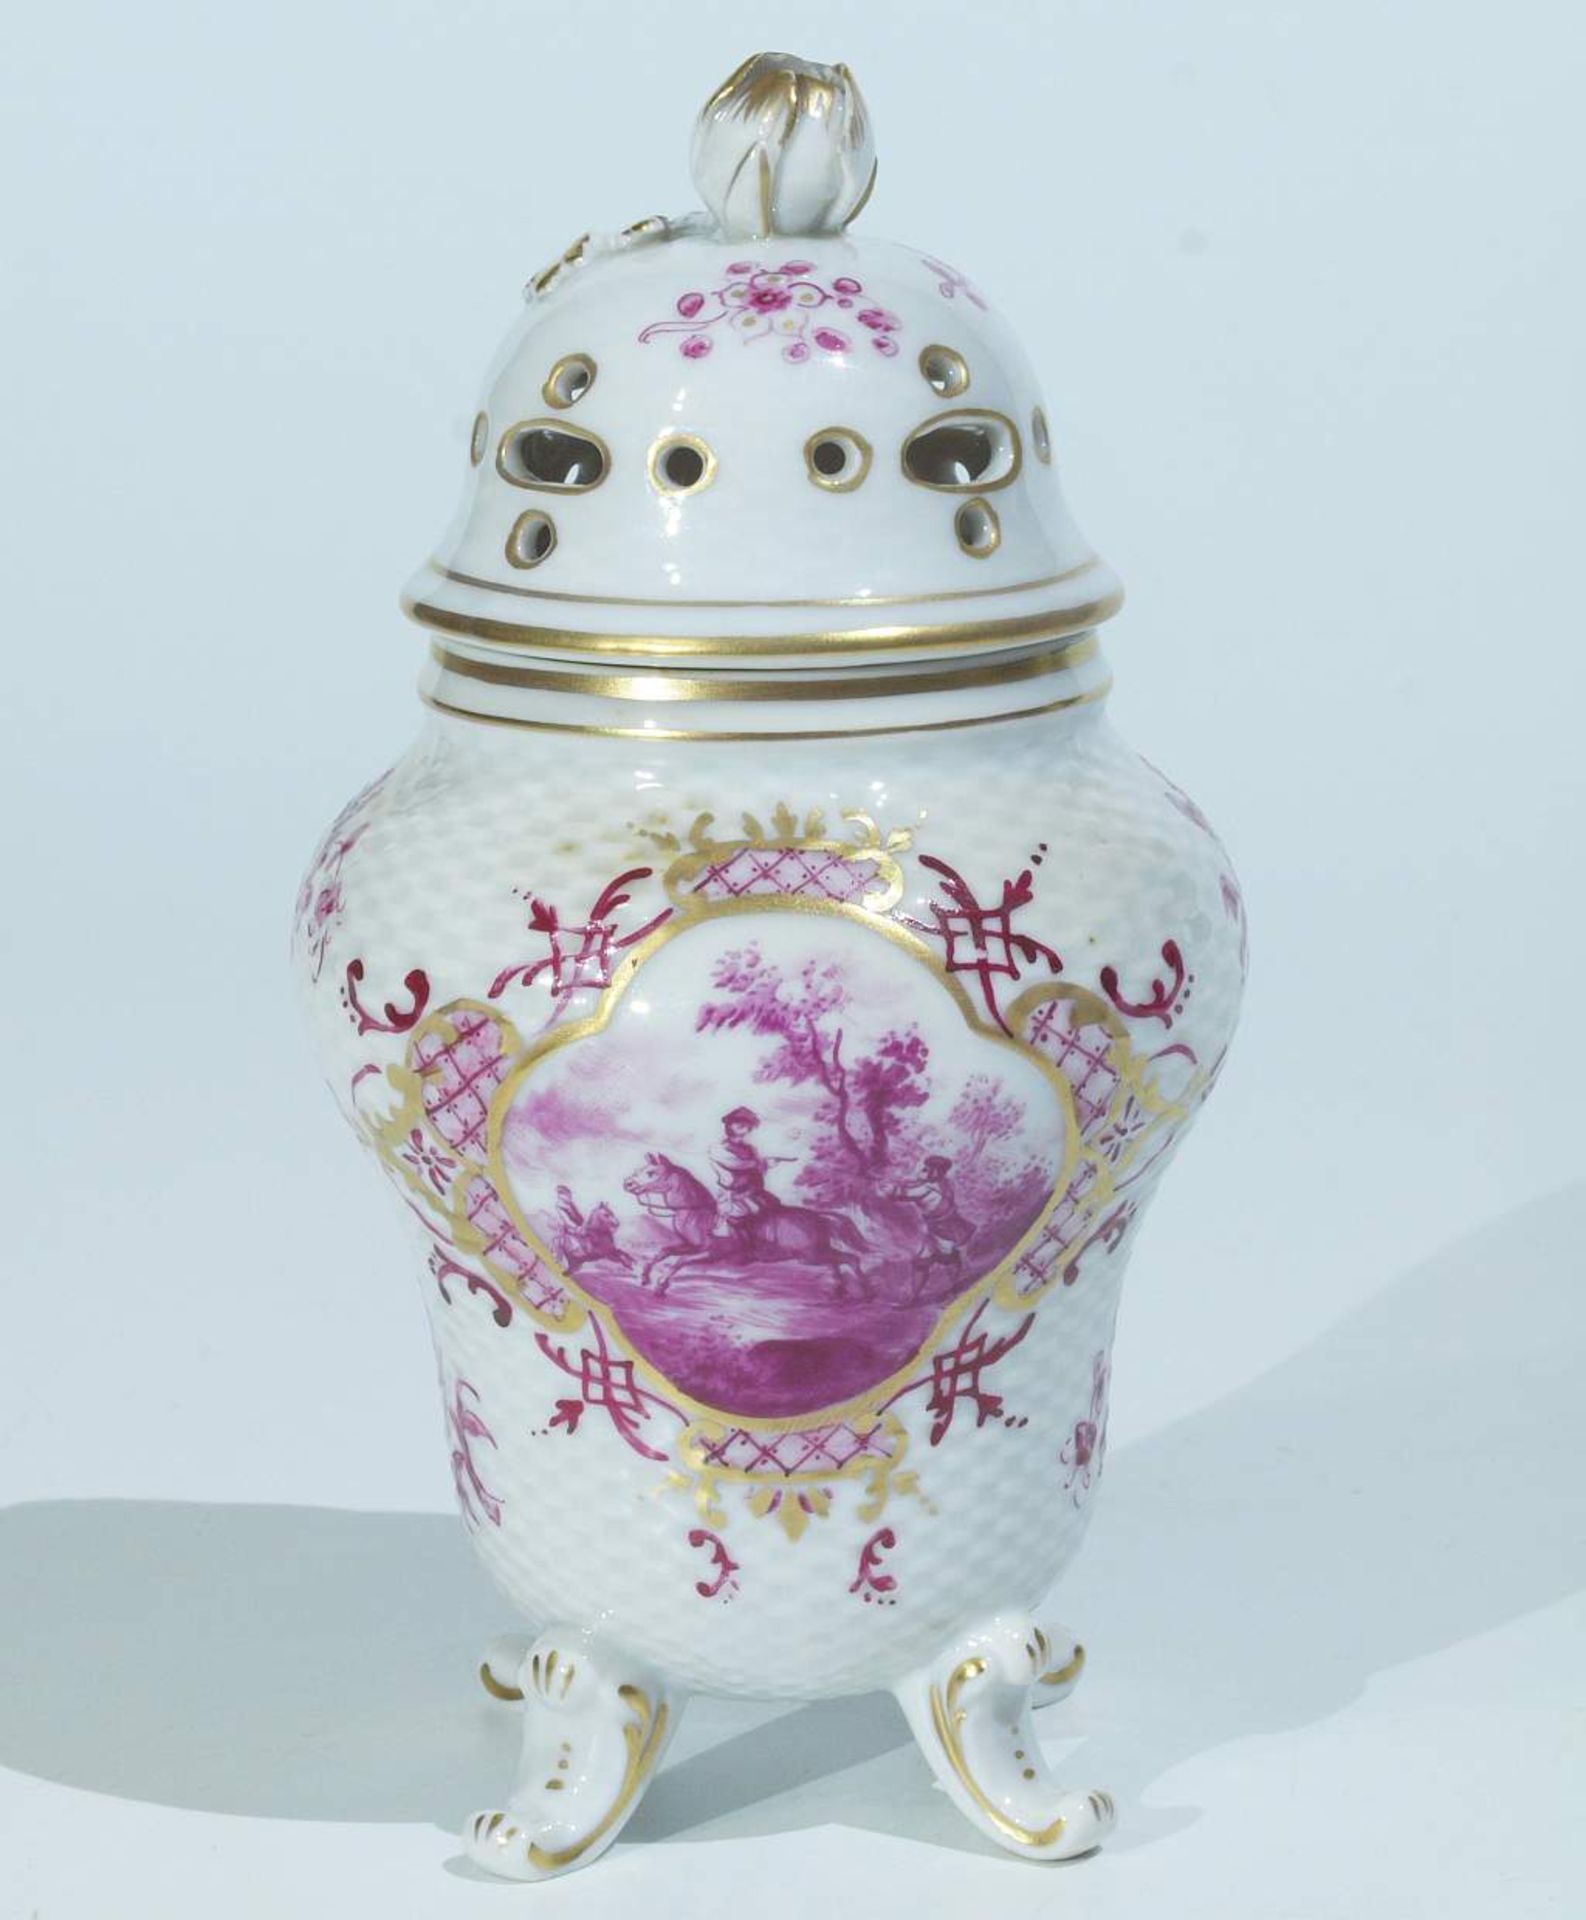 Potpourri-Vase. DRESSEL, KISTER, Passau.Potpourri-Vase. DRESSEL, KISTER, Passau, Marke 1903. - Bild 3 aus 5